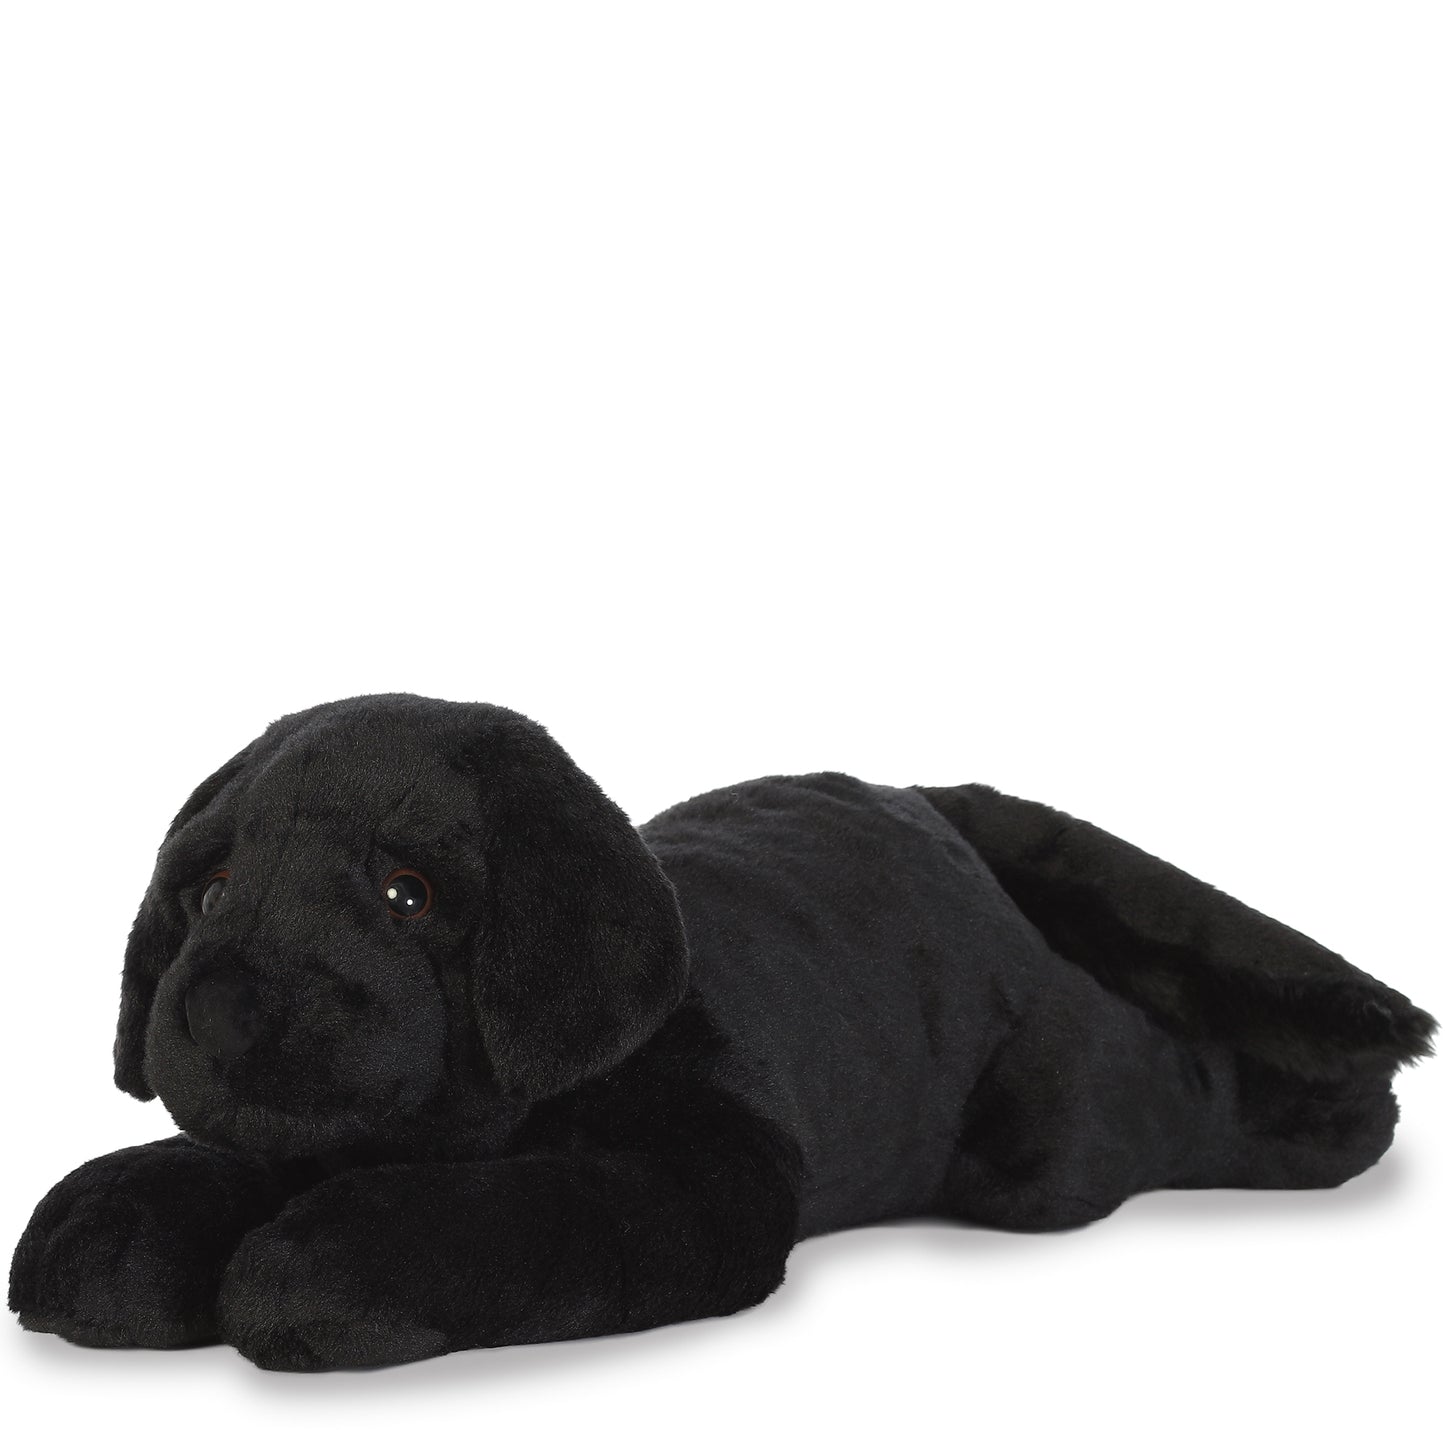 Black Labrador Jumbo-Sized 28 inch